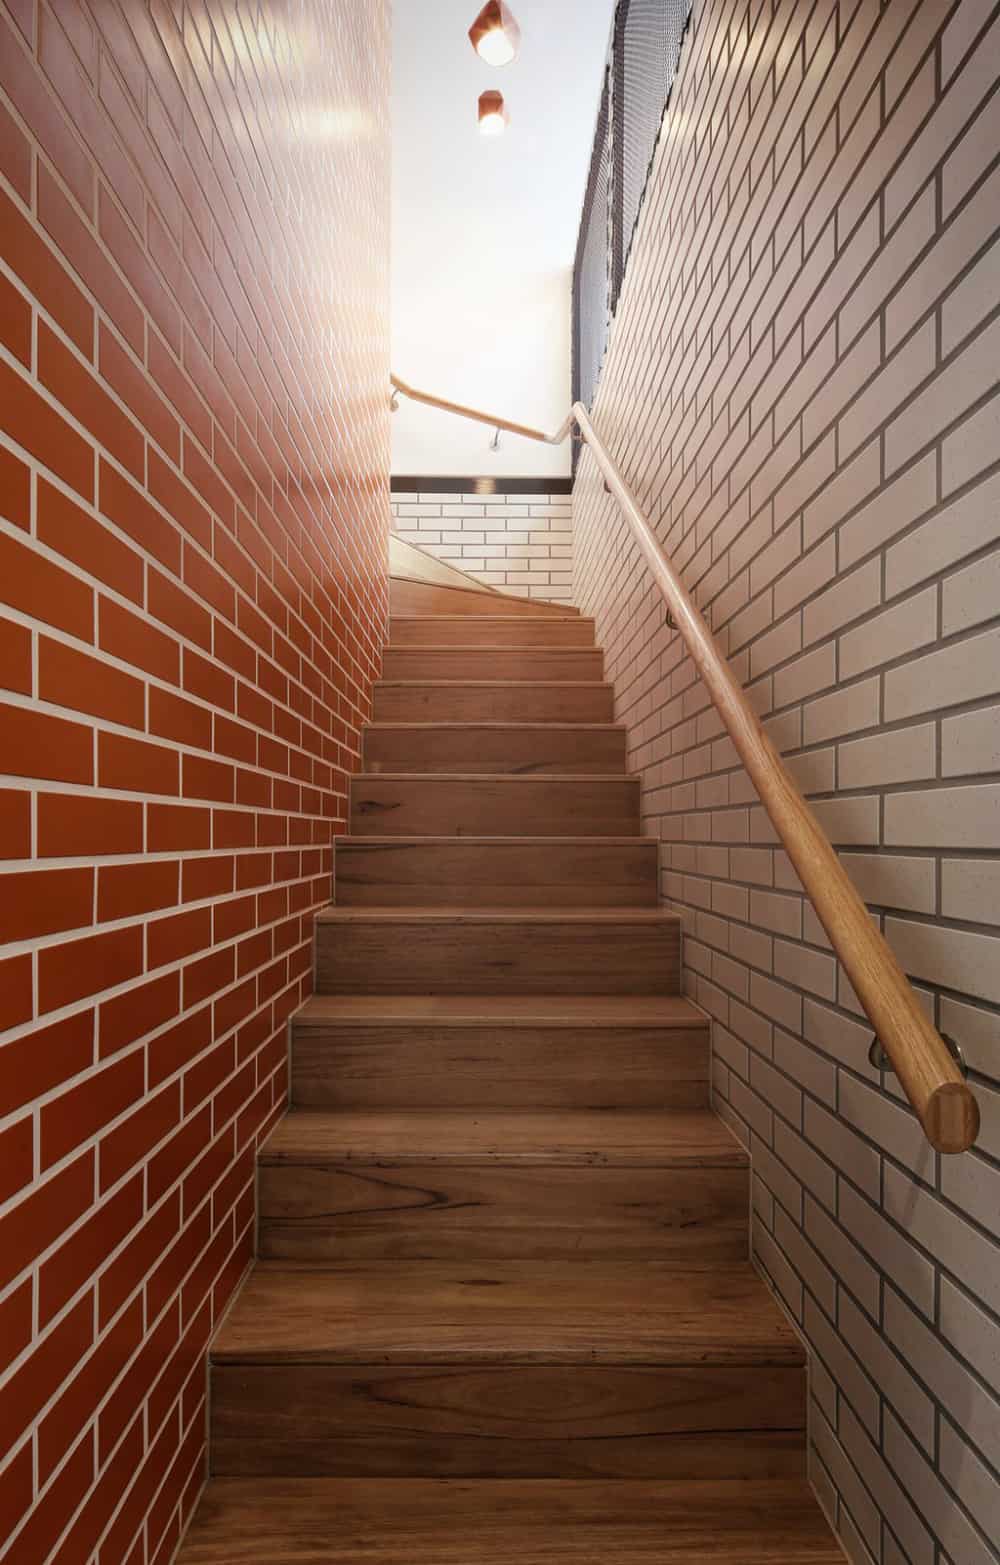 Brick walls surrounding a staircase